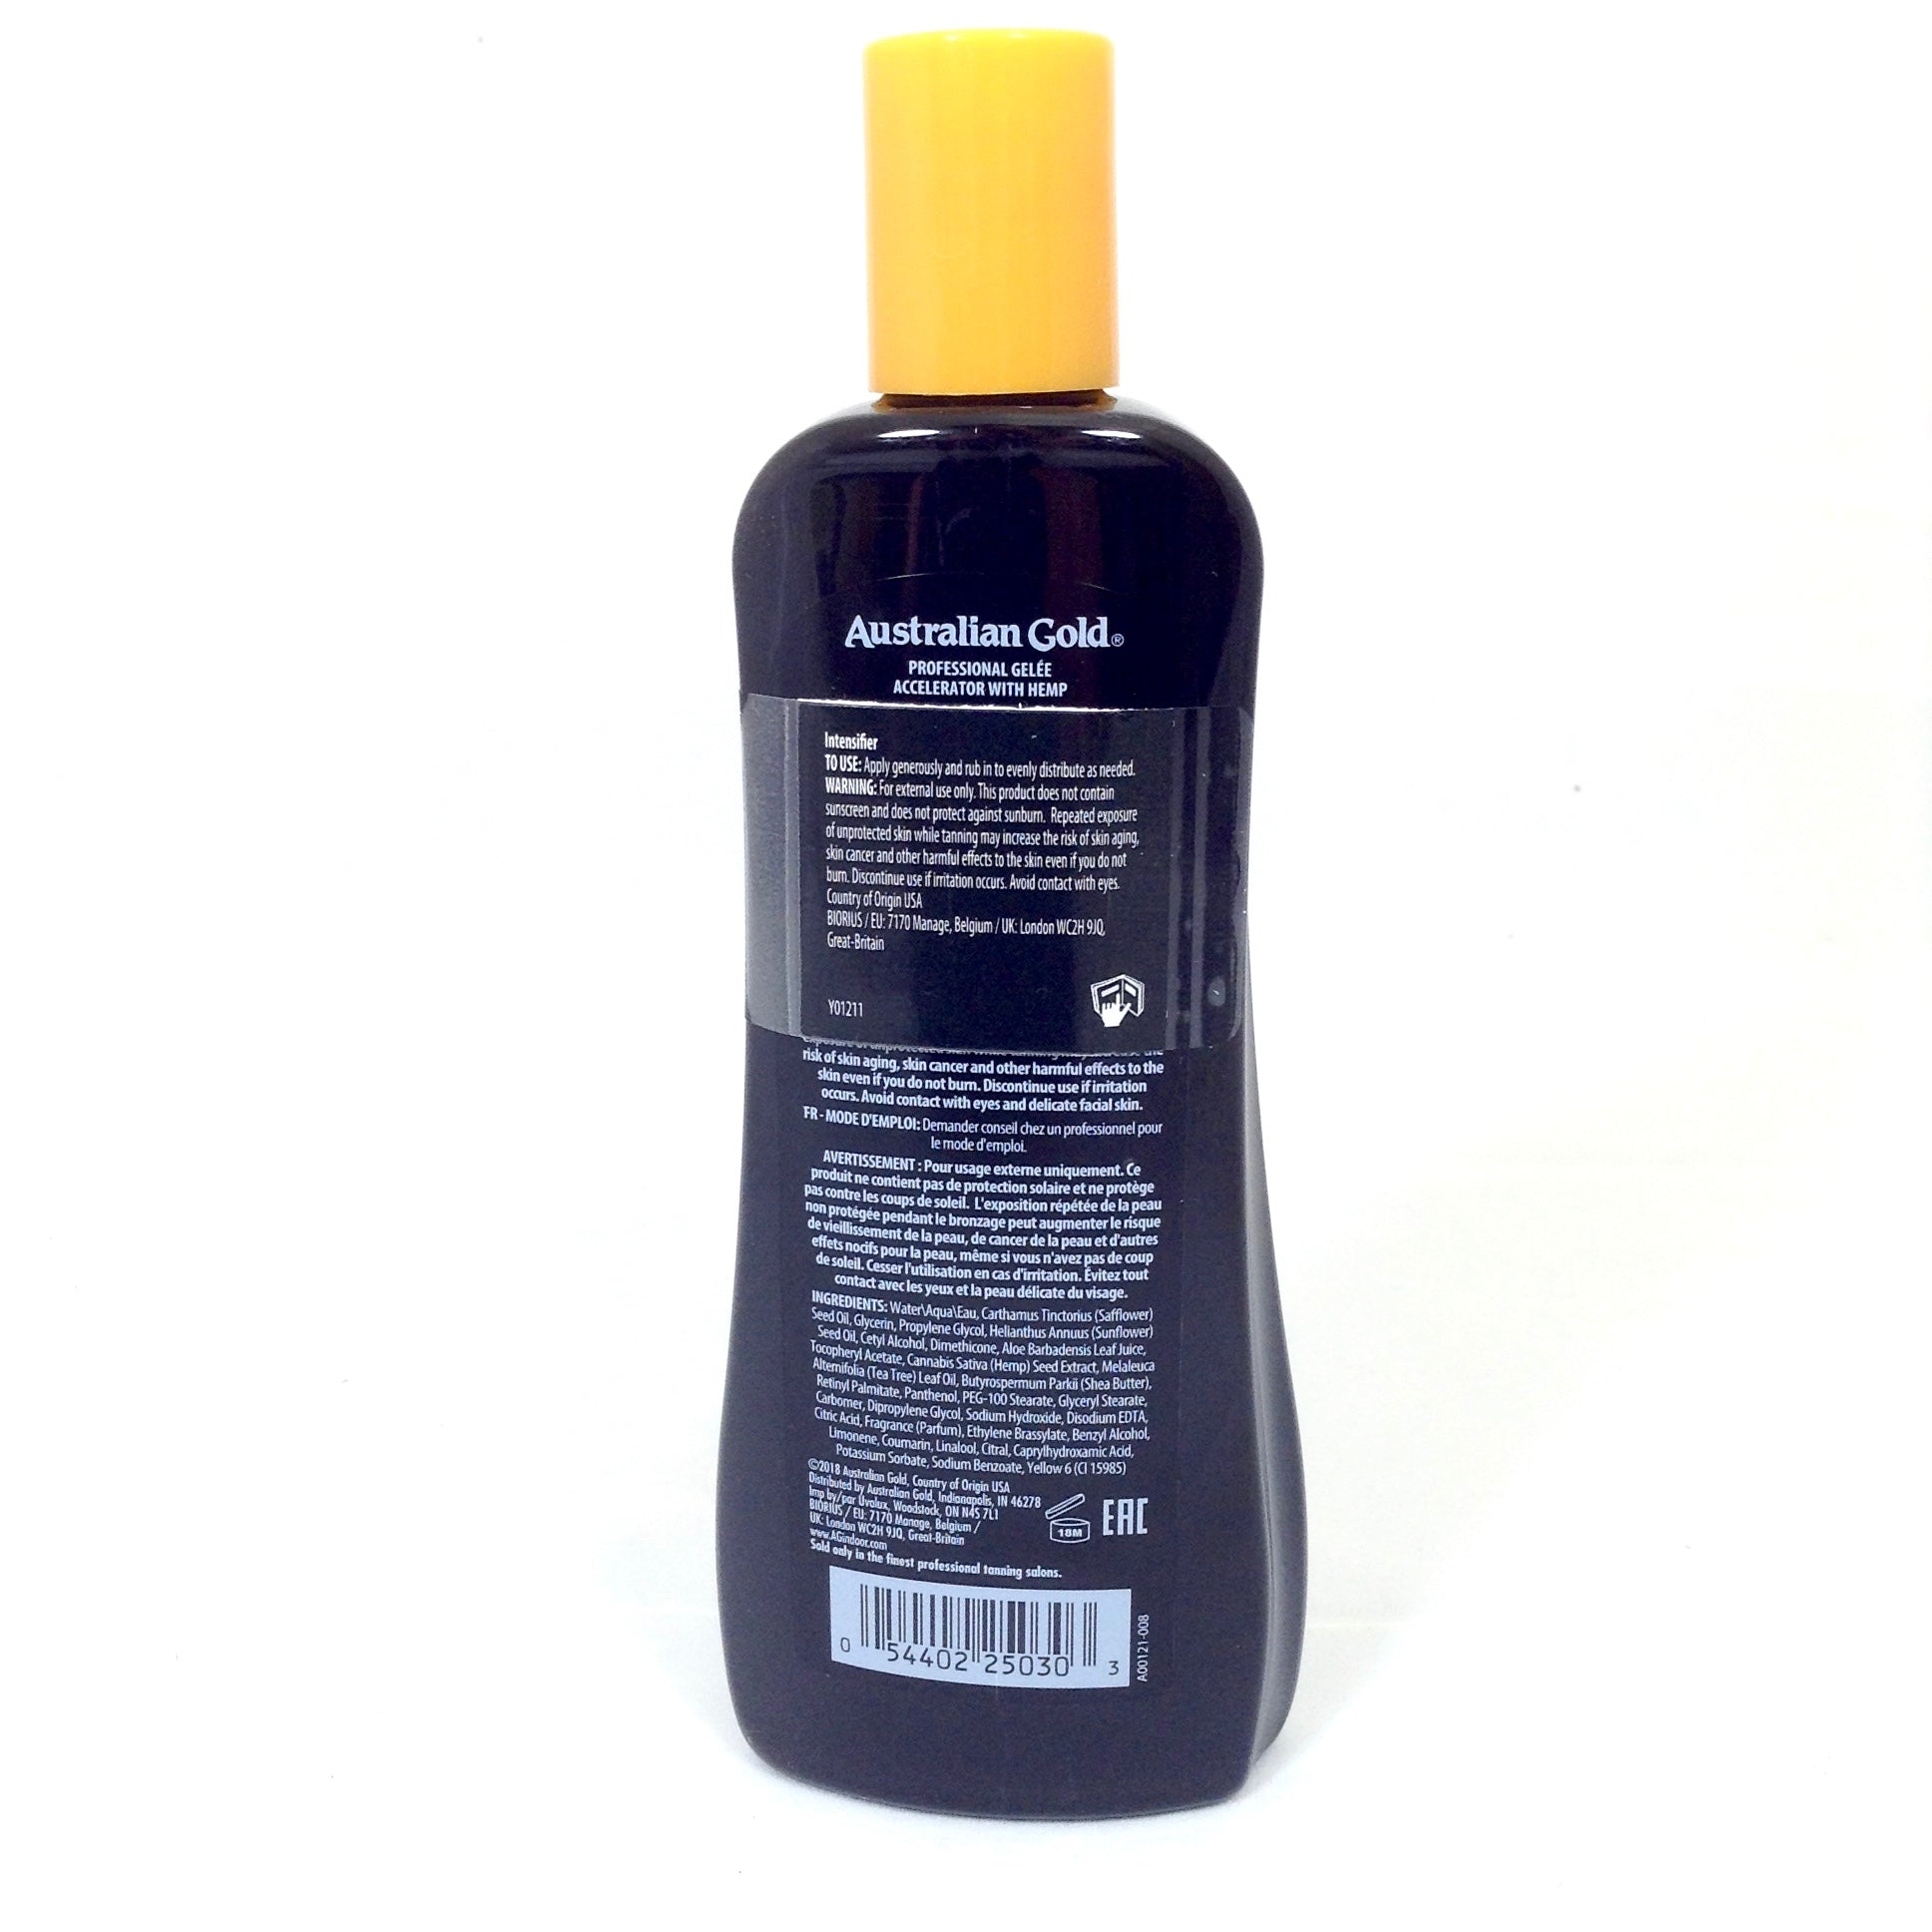 Australian Gold Gelee Accelerator Tanning lotion ingredients